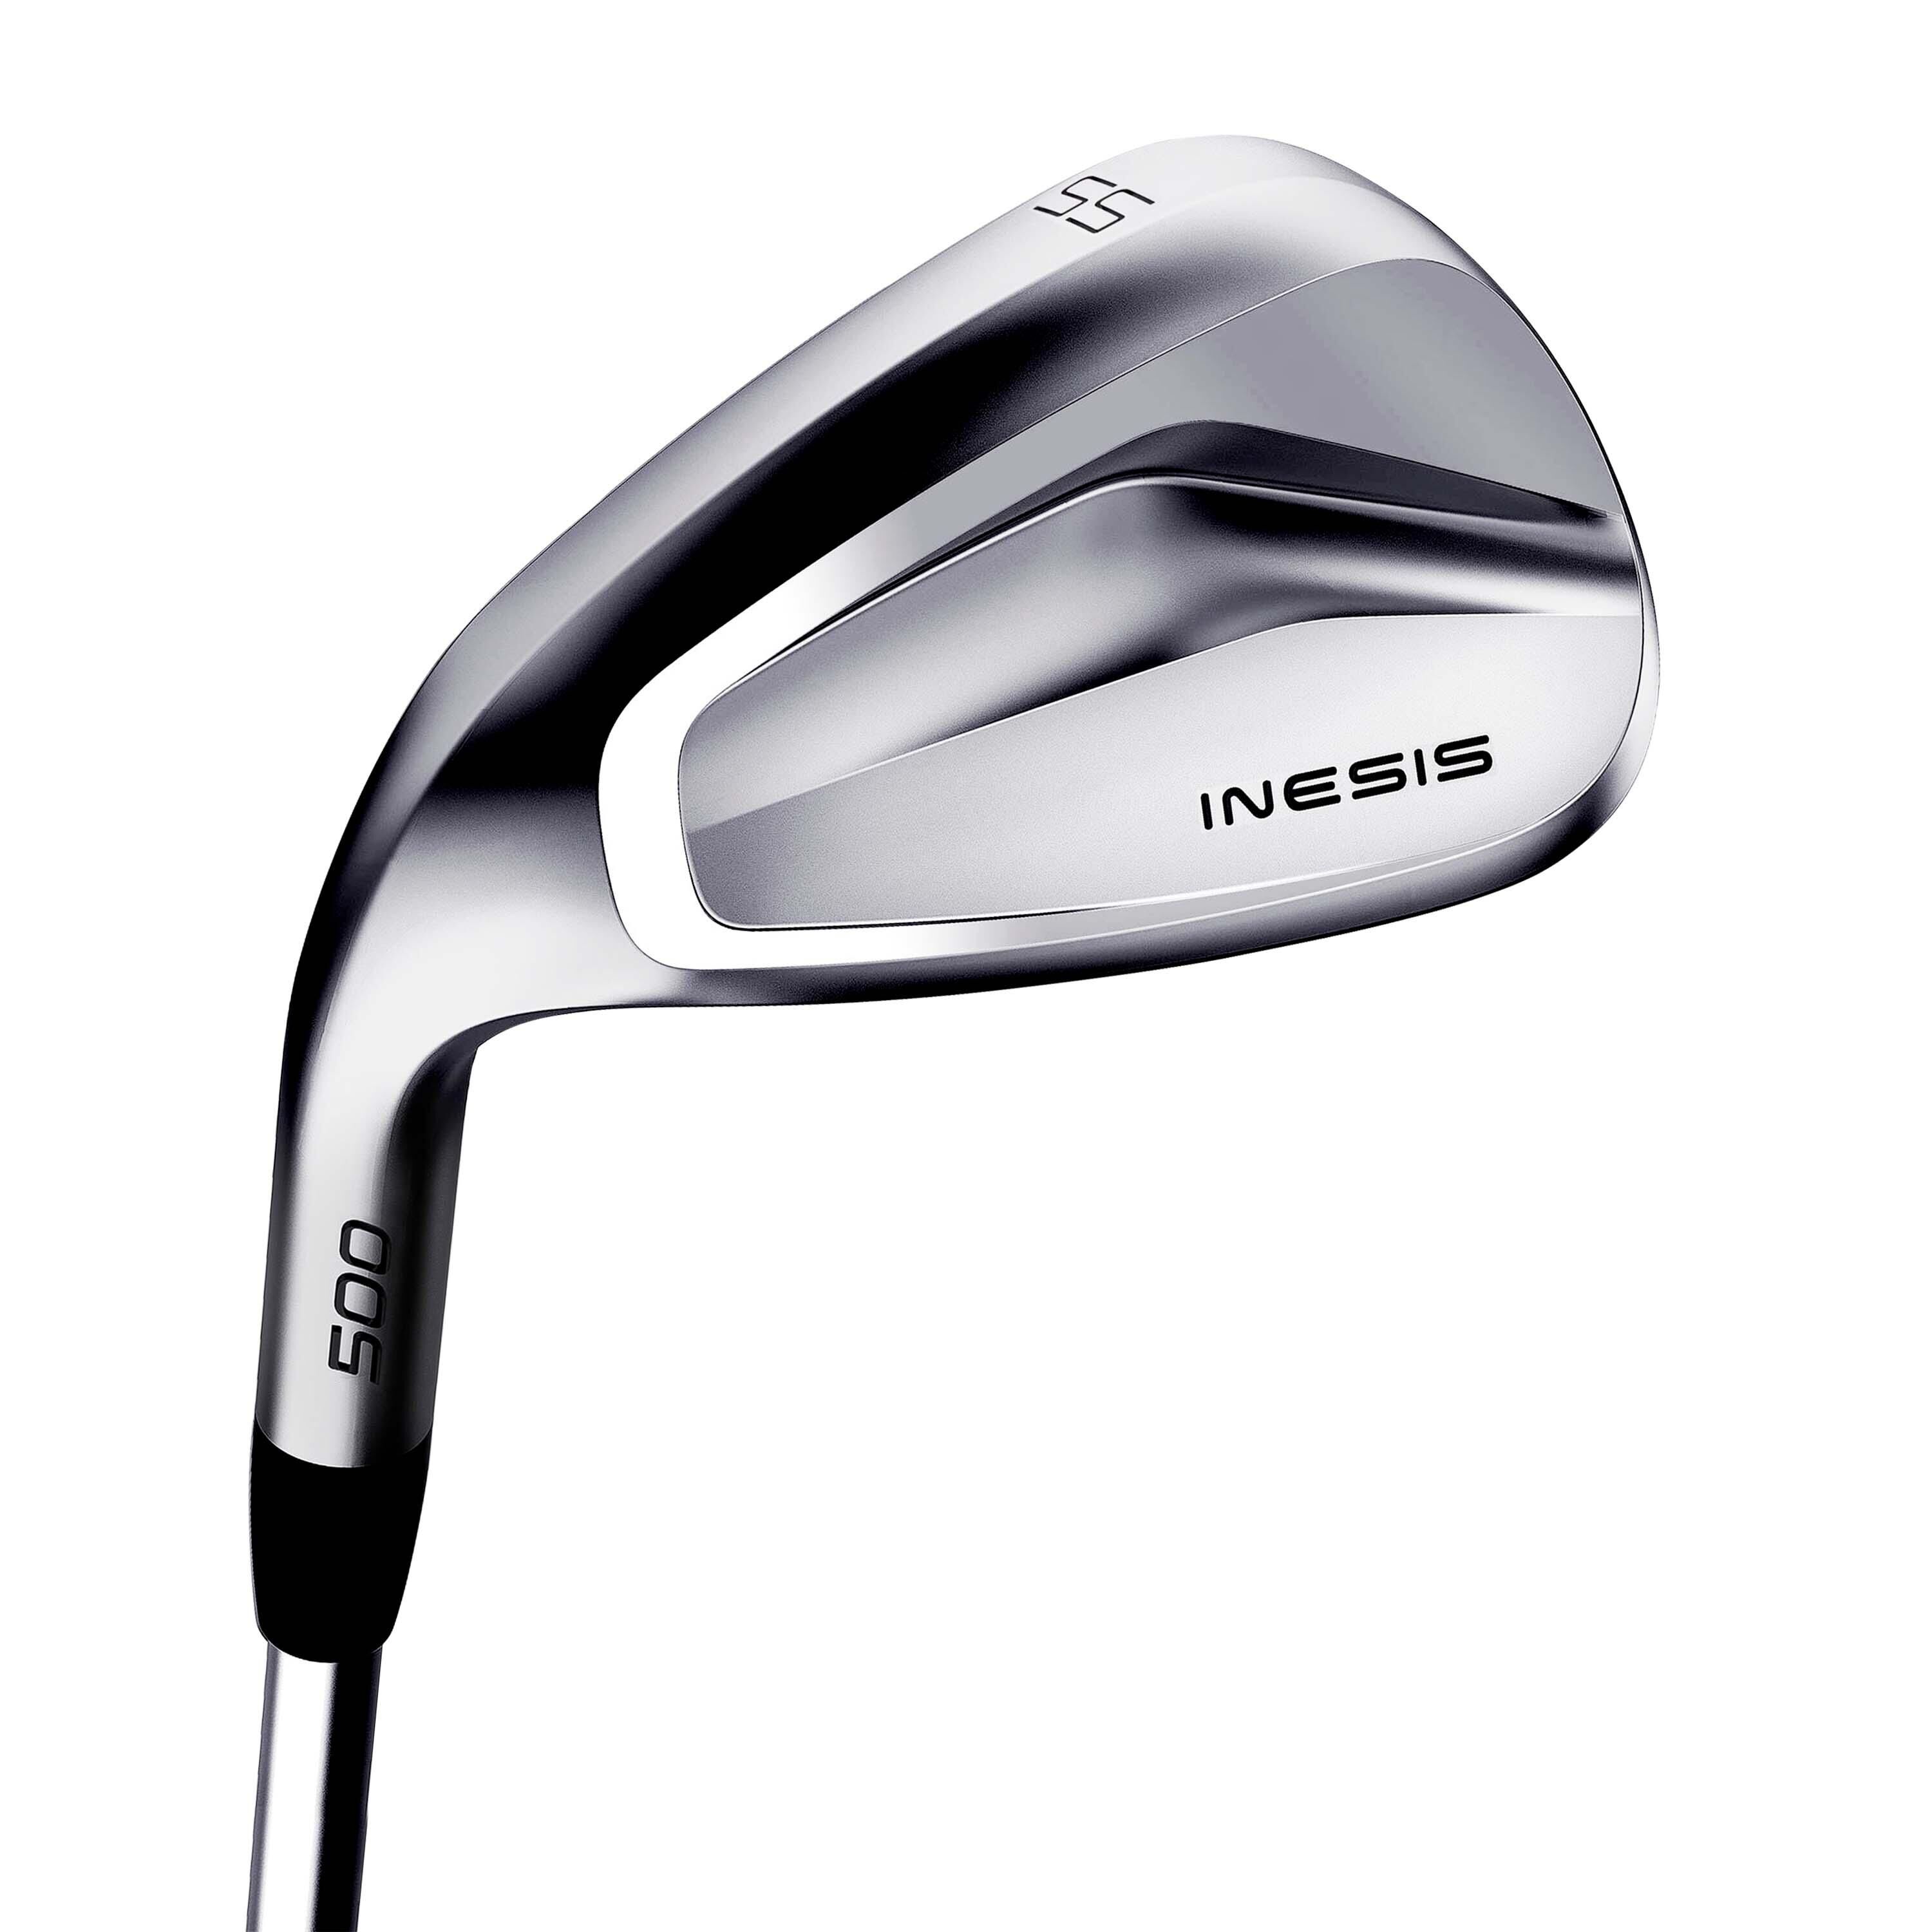 INESIS Golf wedge left-handed size 2 high speed - INESIS 500